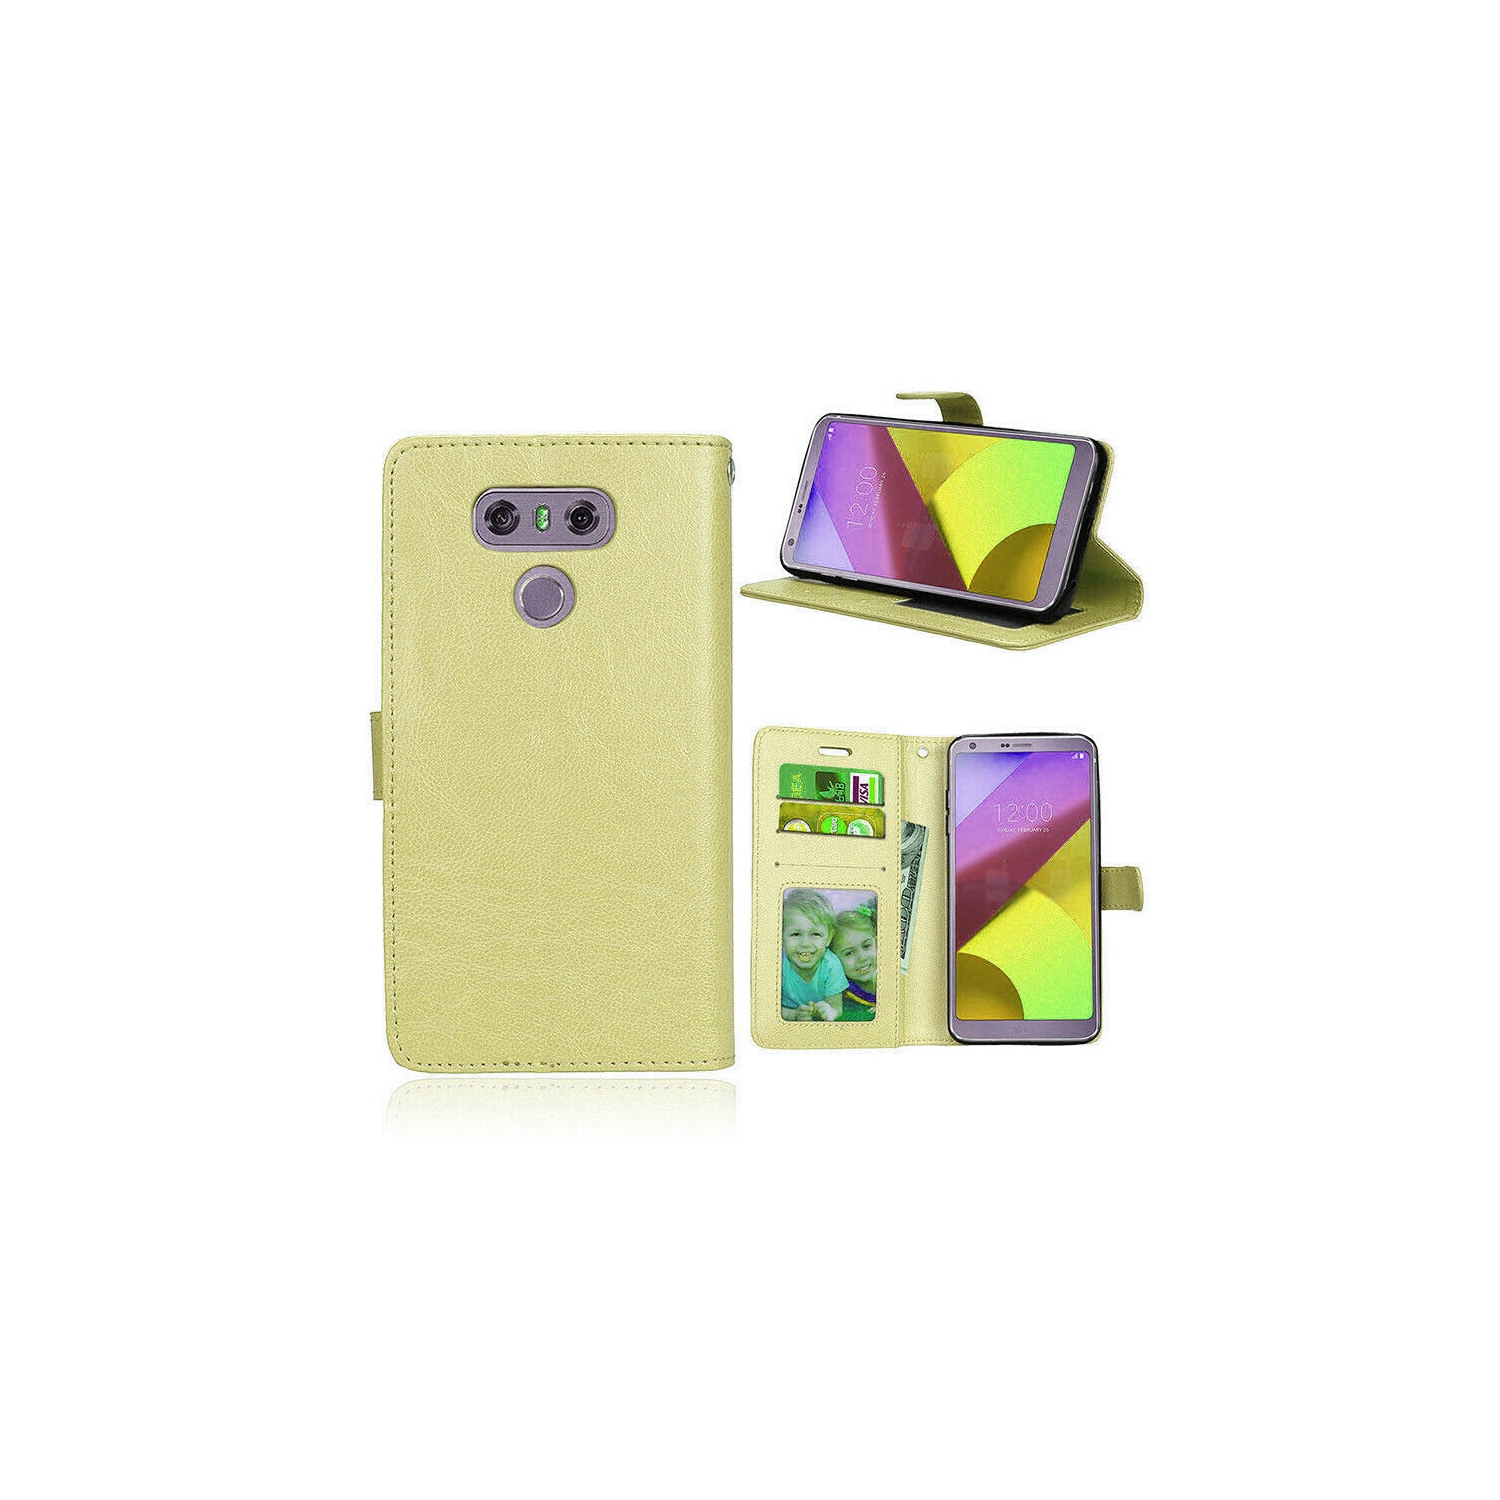 【CSmart】 Magnetic Card Slot Leather Folio Wallet Flip Case Cover for LG G5, Gold